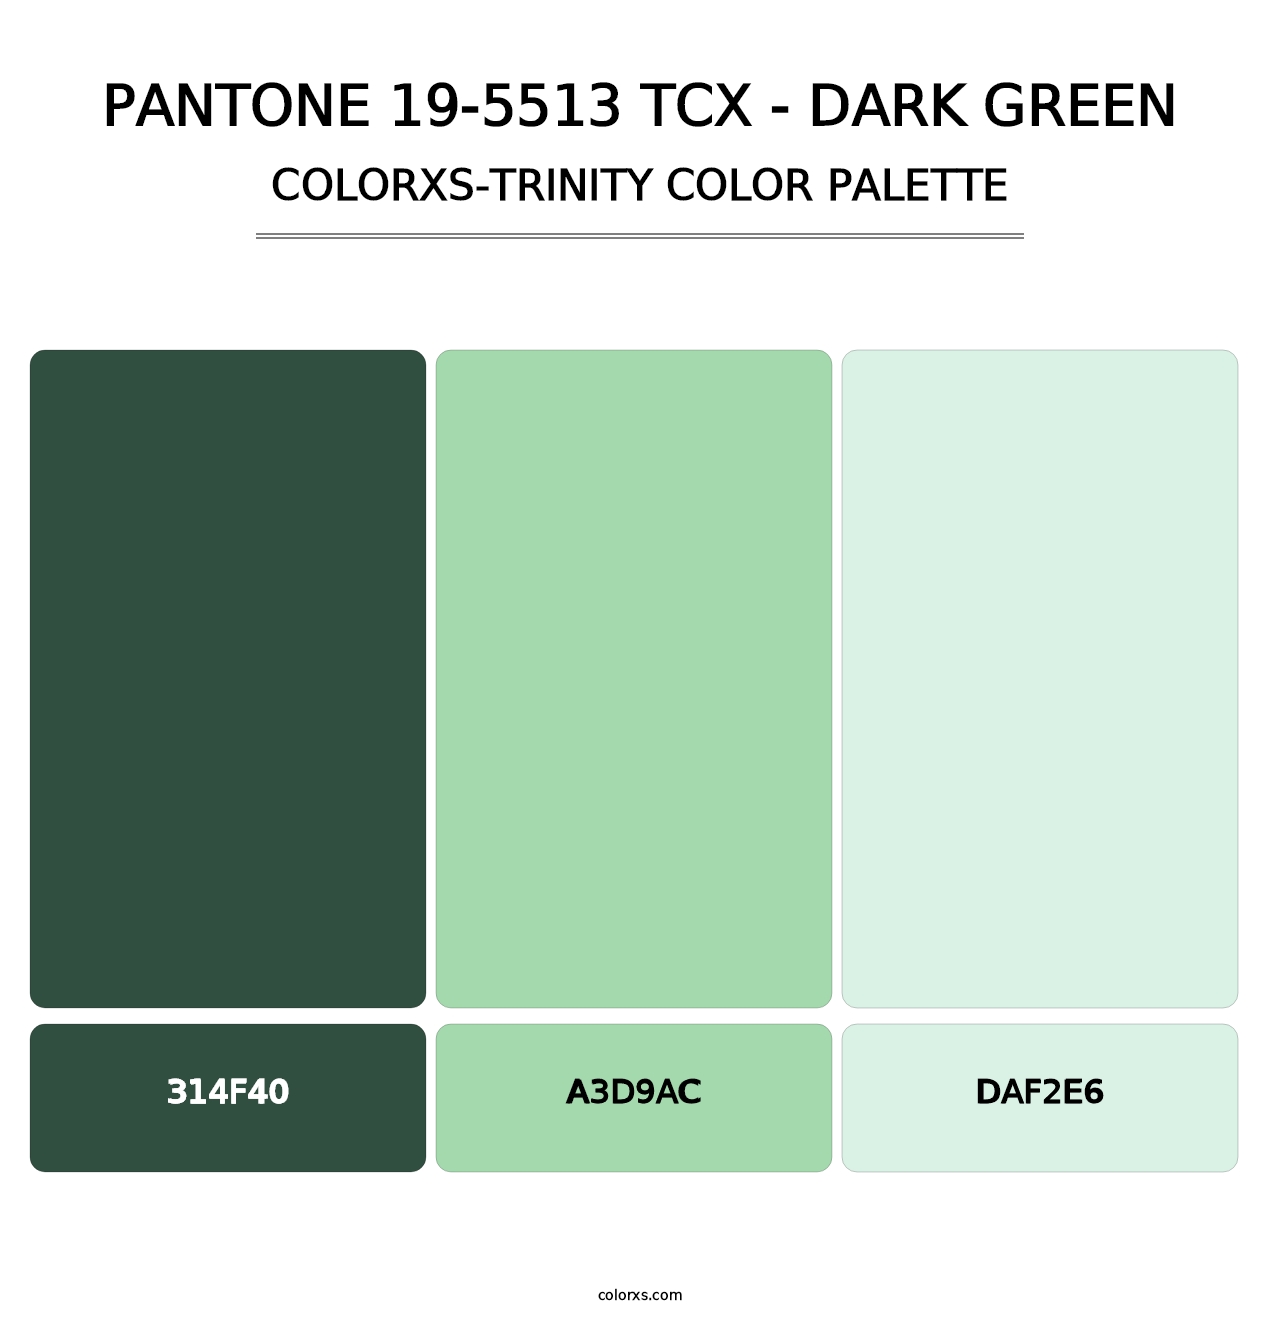 PANTONE 19-5513 TCX - Dark Green - Colorxs Trinity Palette